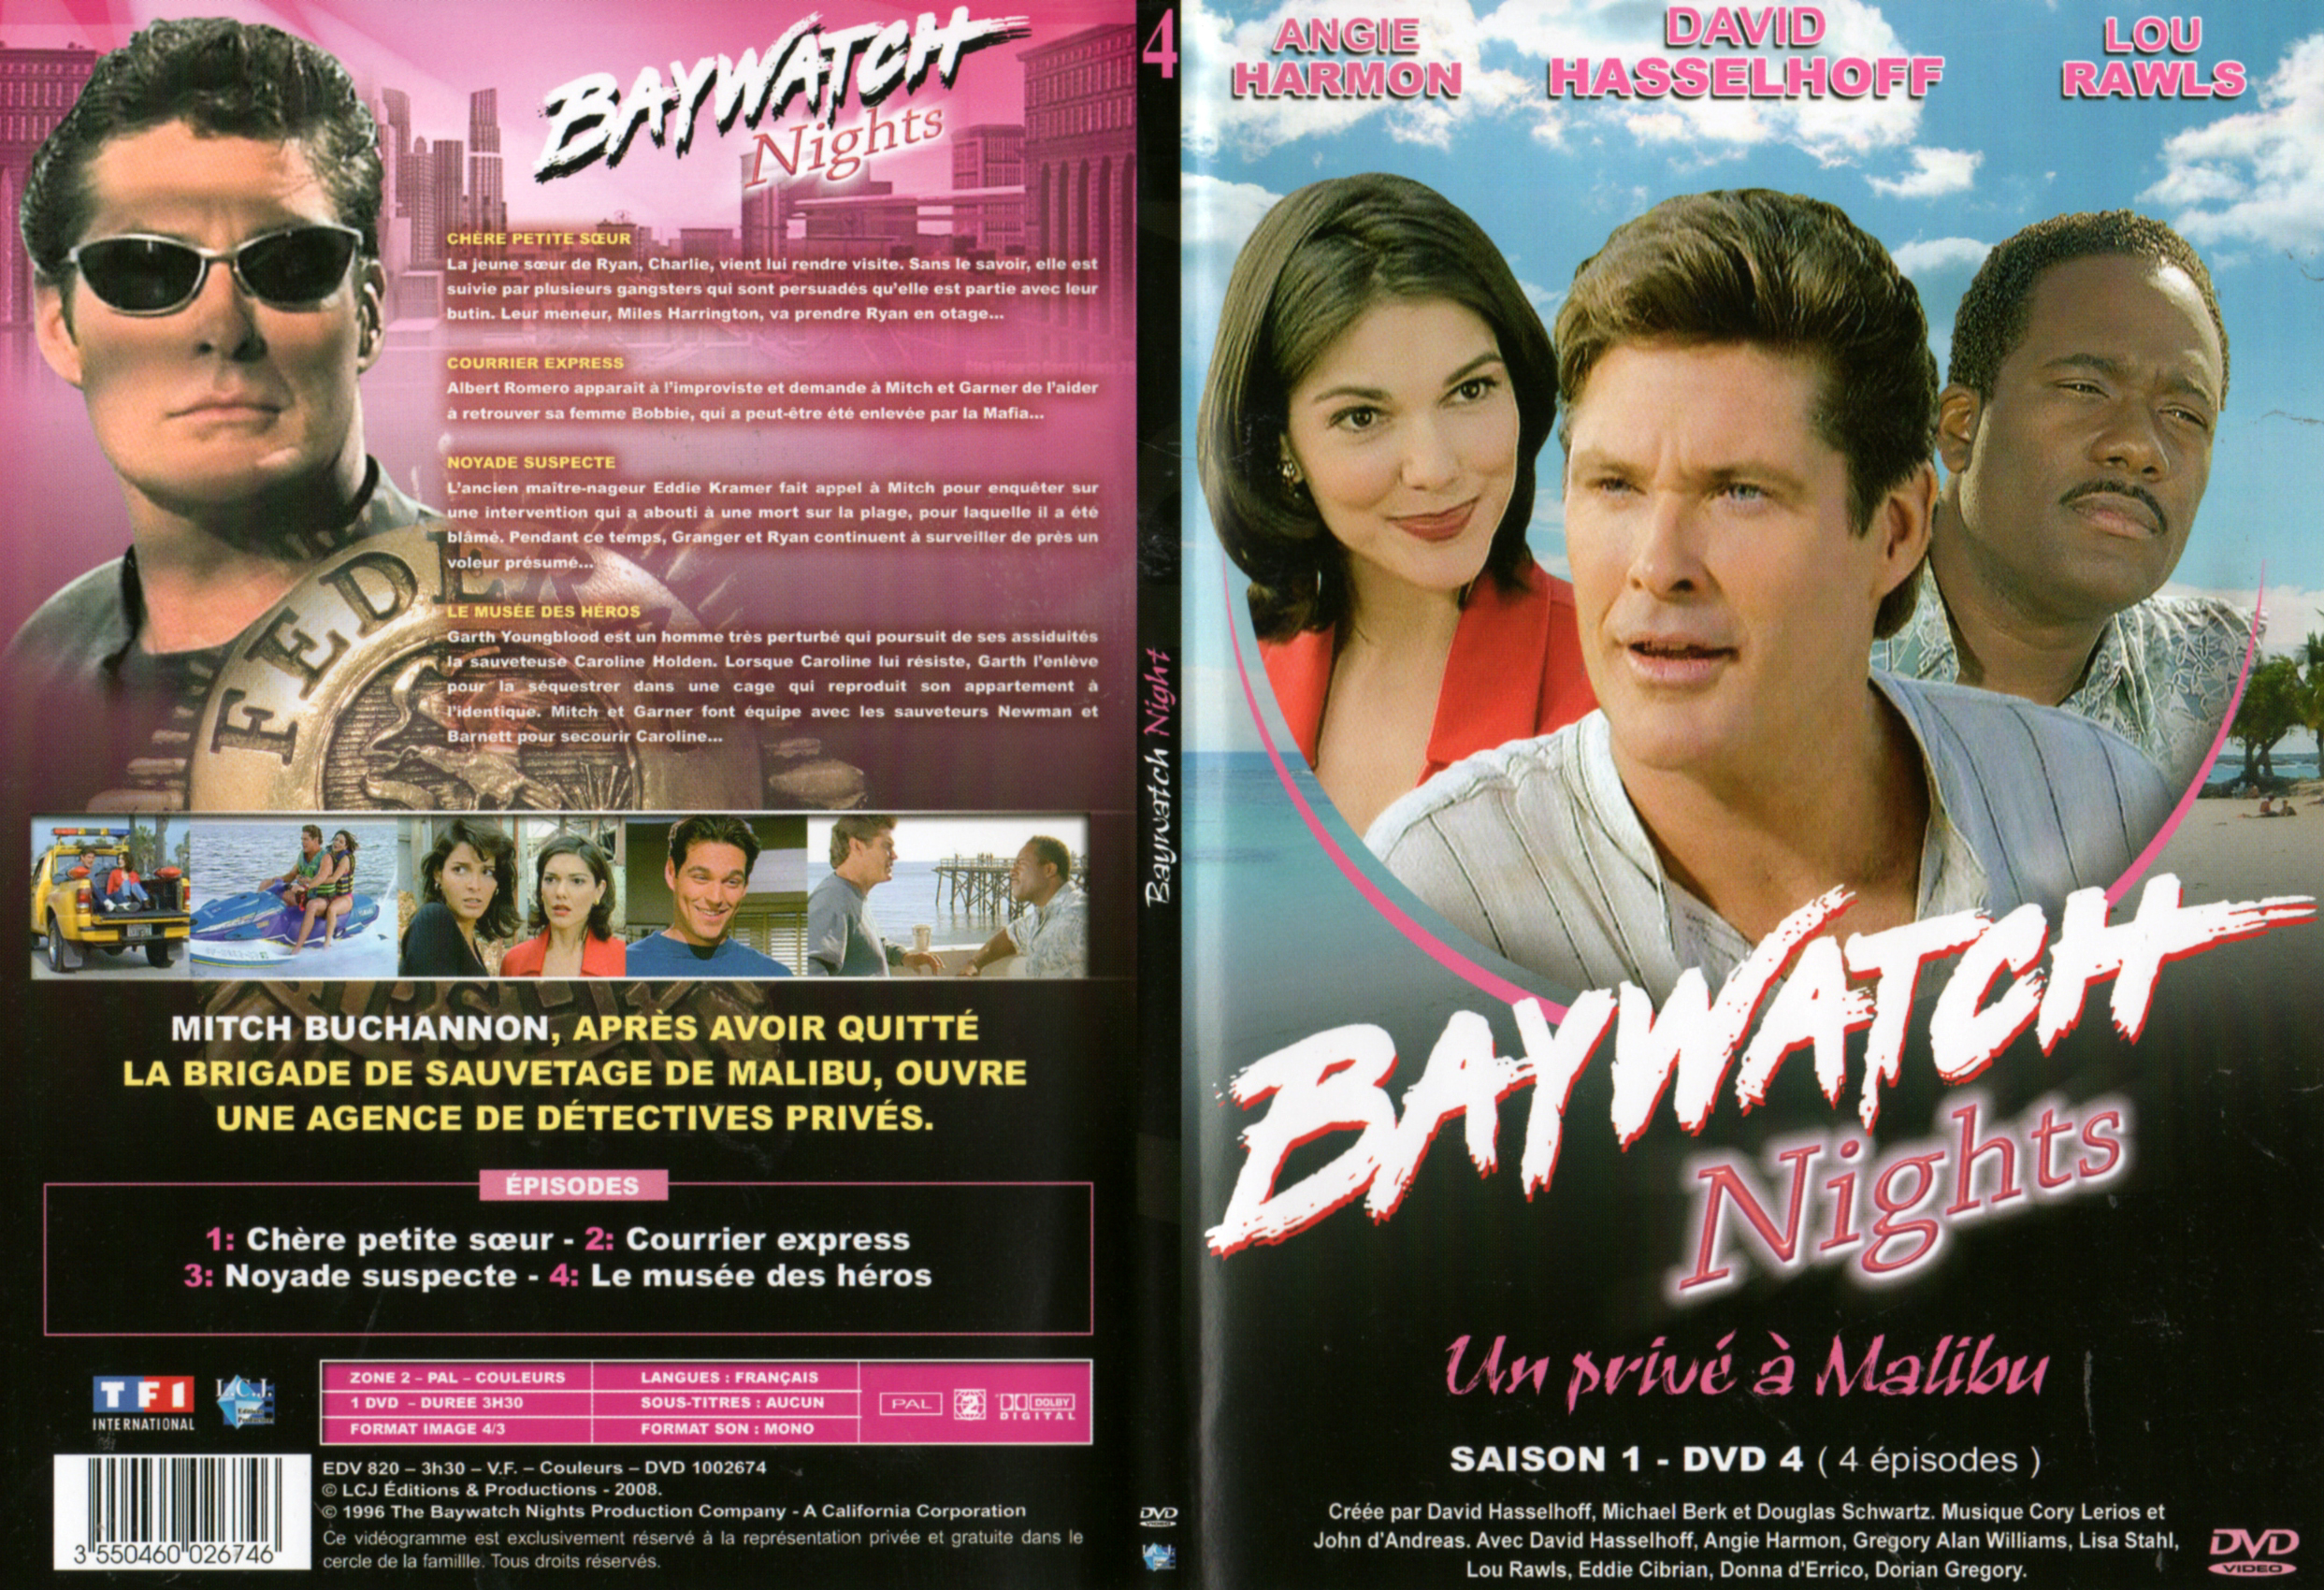 Jaquette DVD Baywatch nights Saison 1 DISC 4